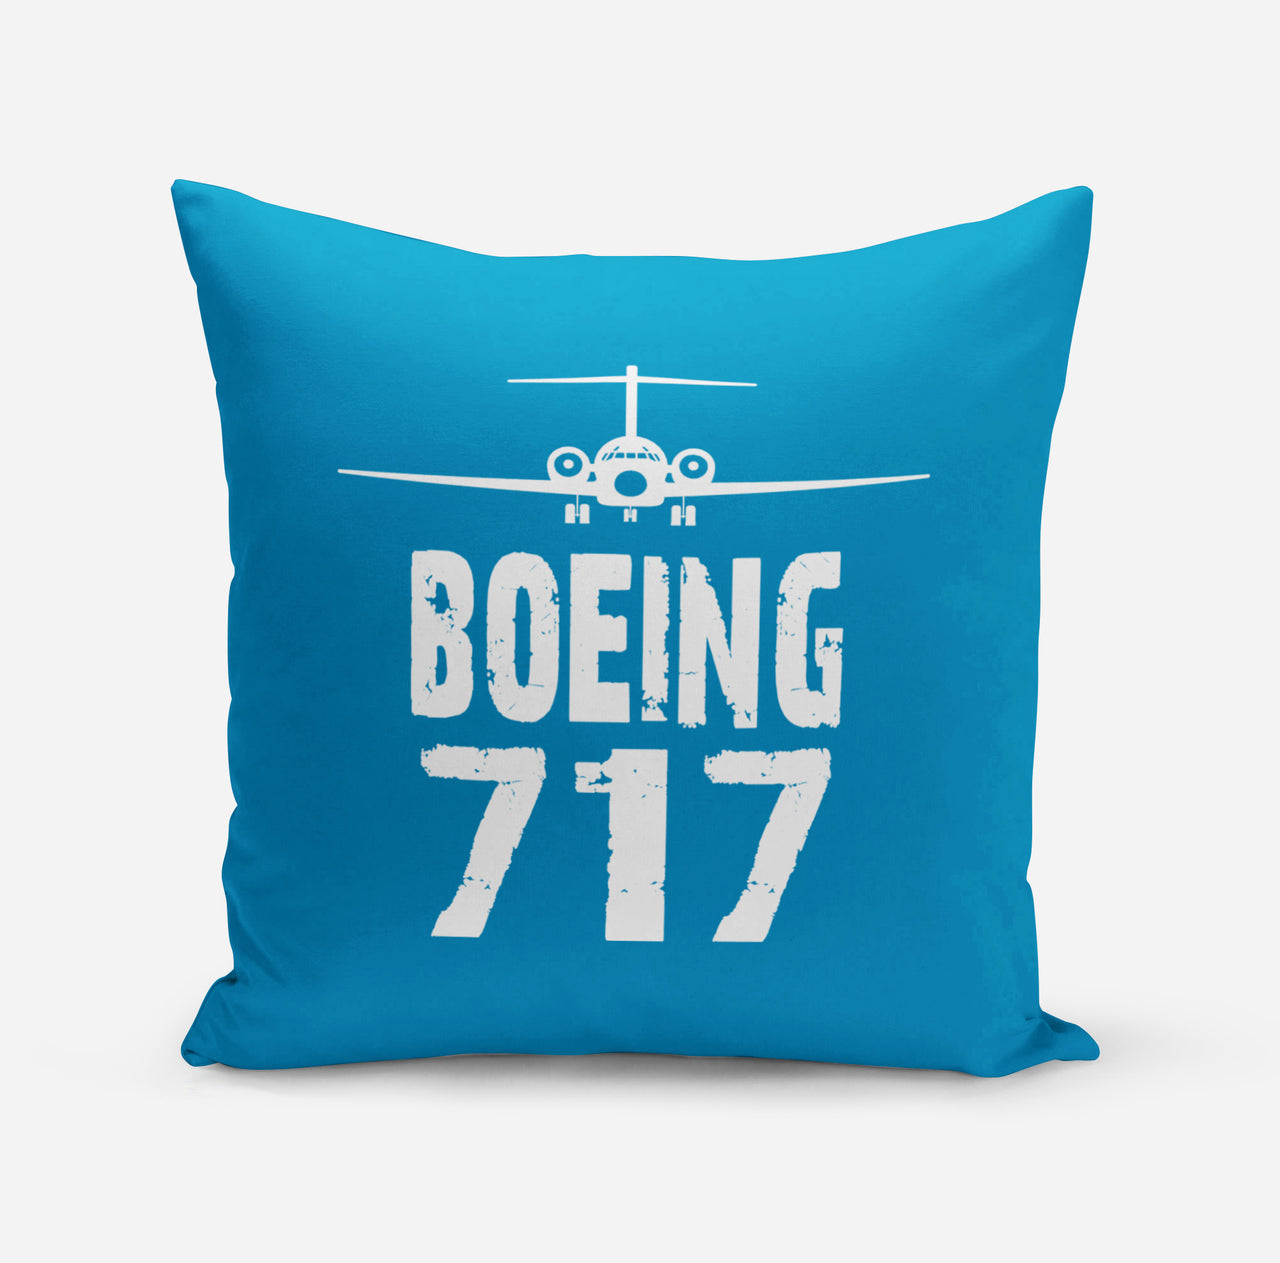 Boeing 717 & Plane Designed Pillows